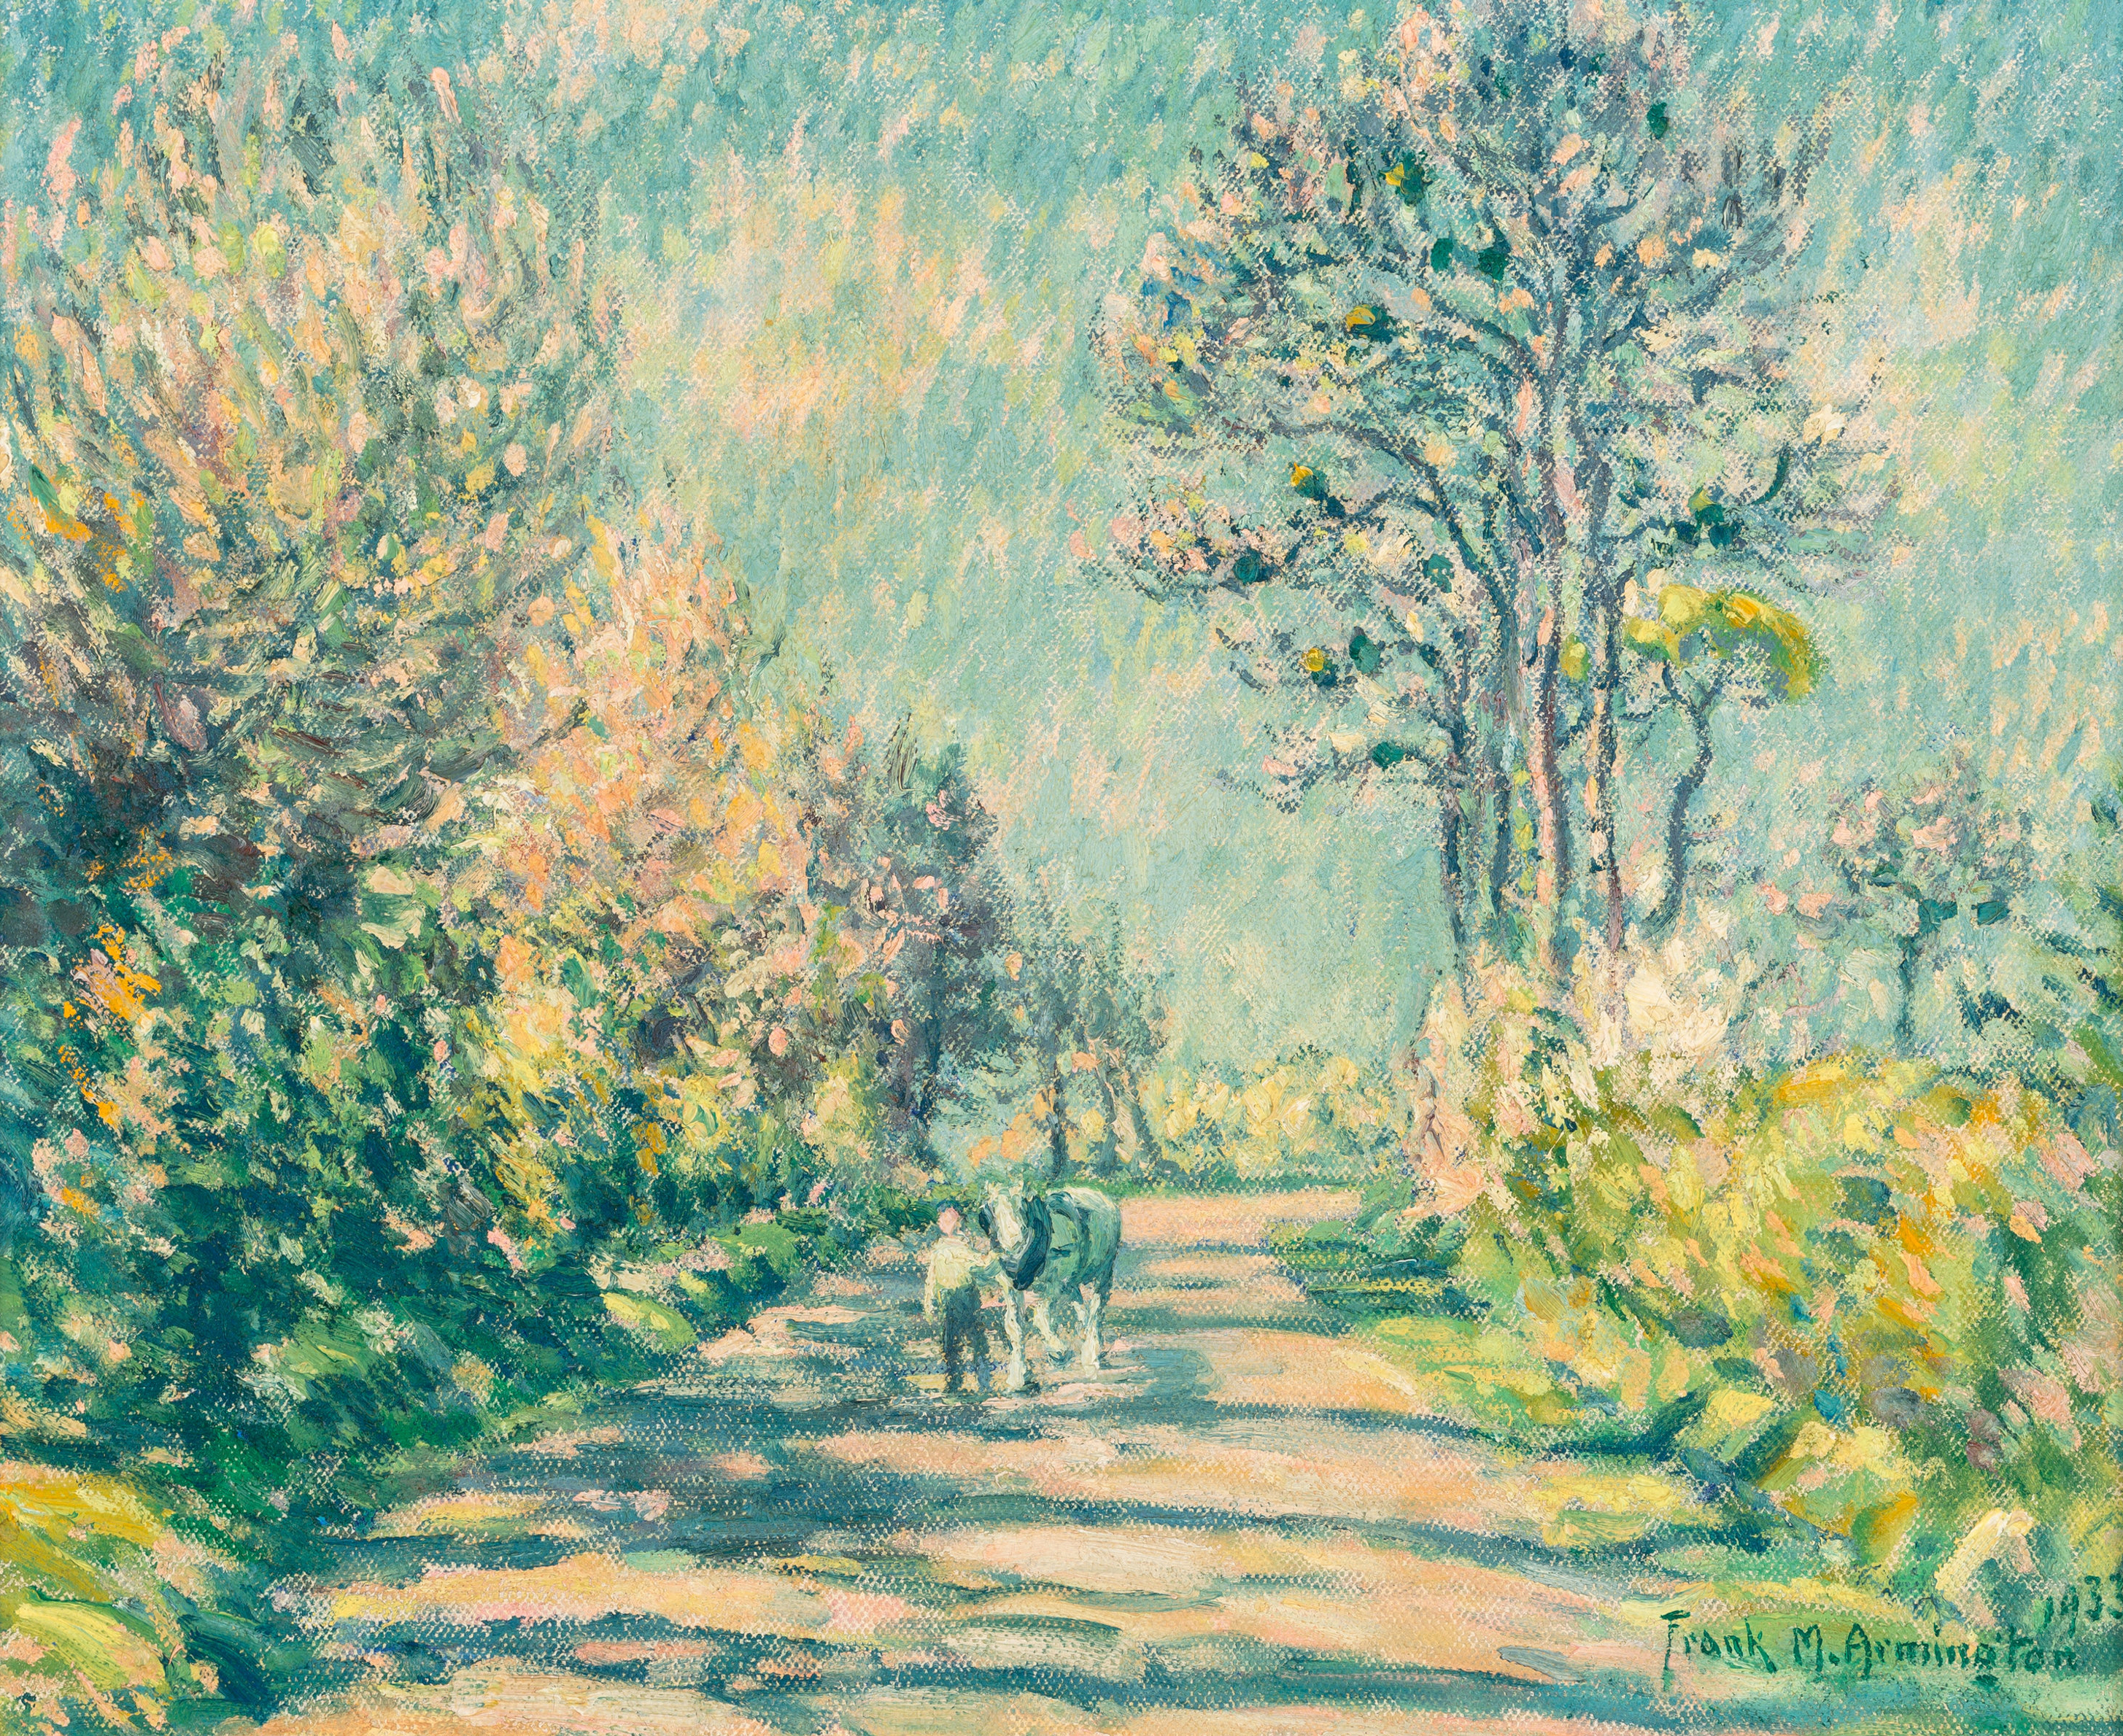 General 2910x2380 frank armington classic art oil painting signature artwork trees path sunlight children animals